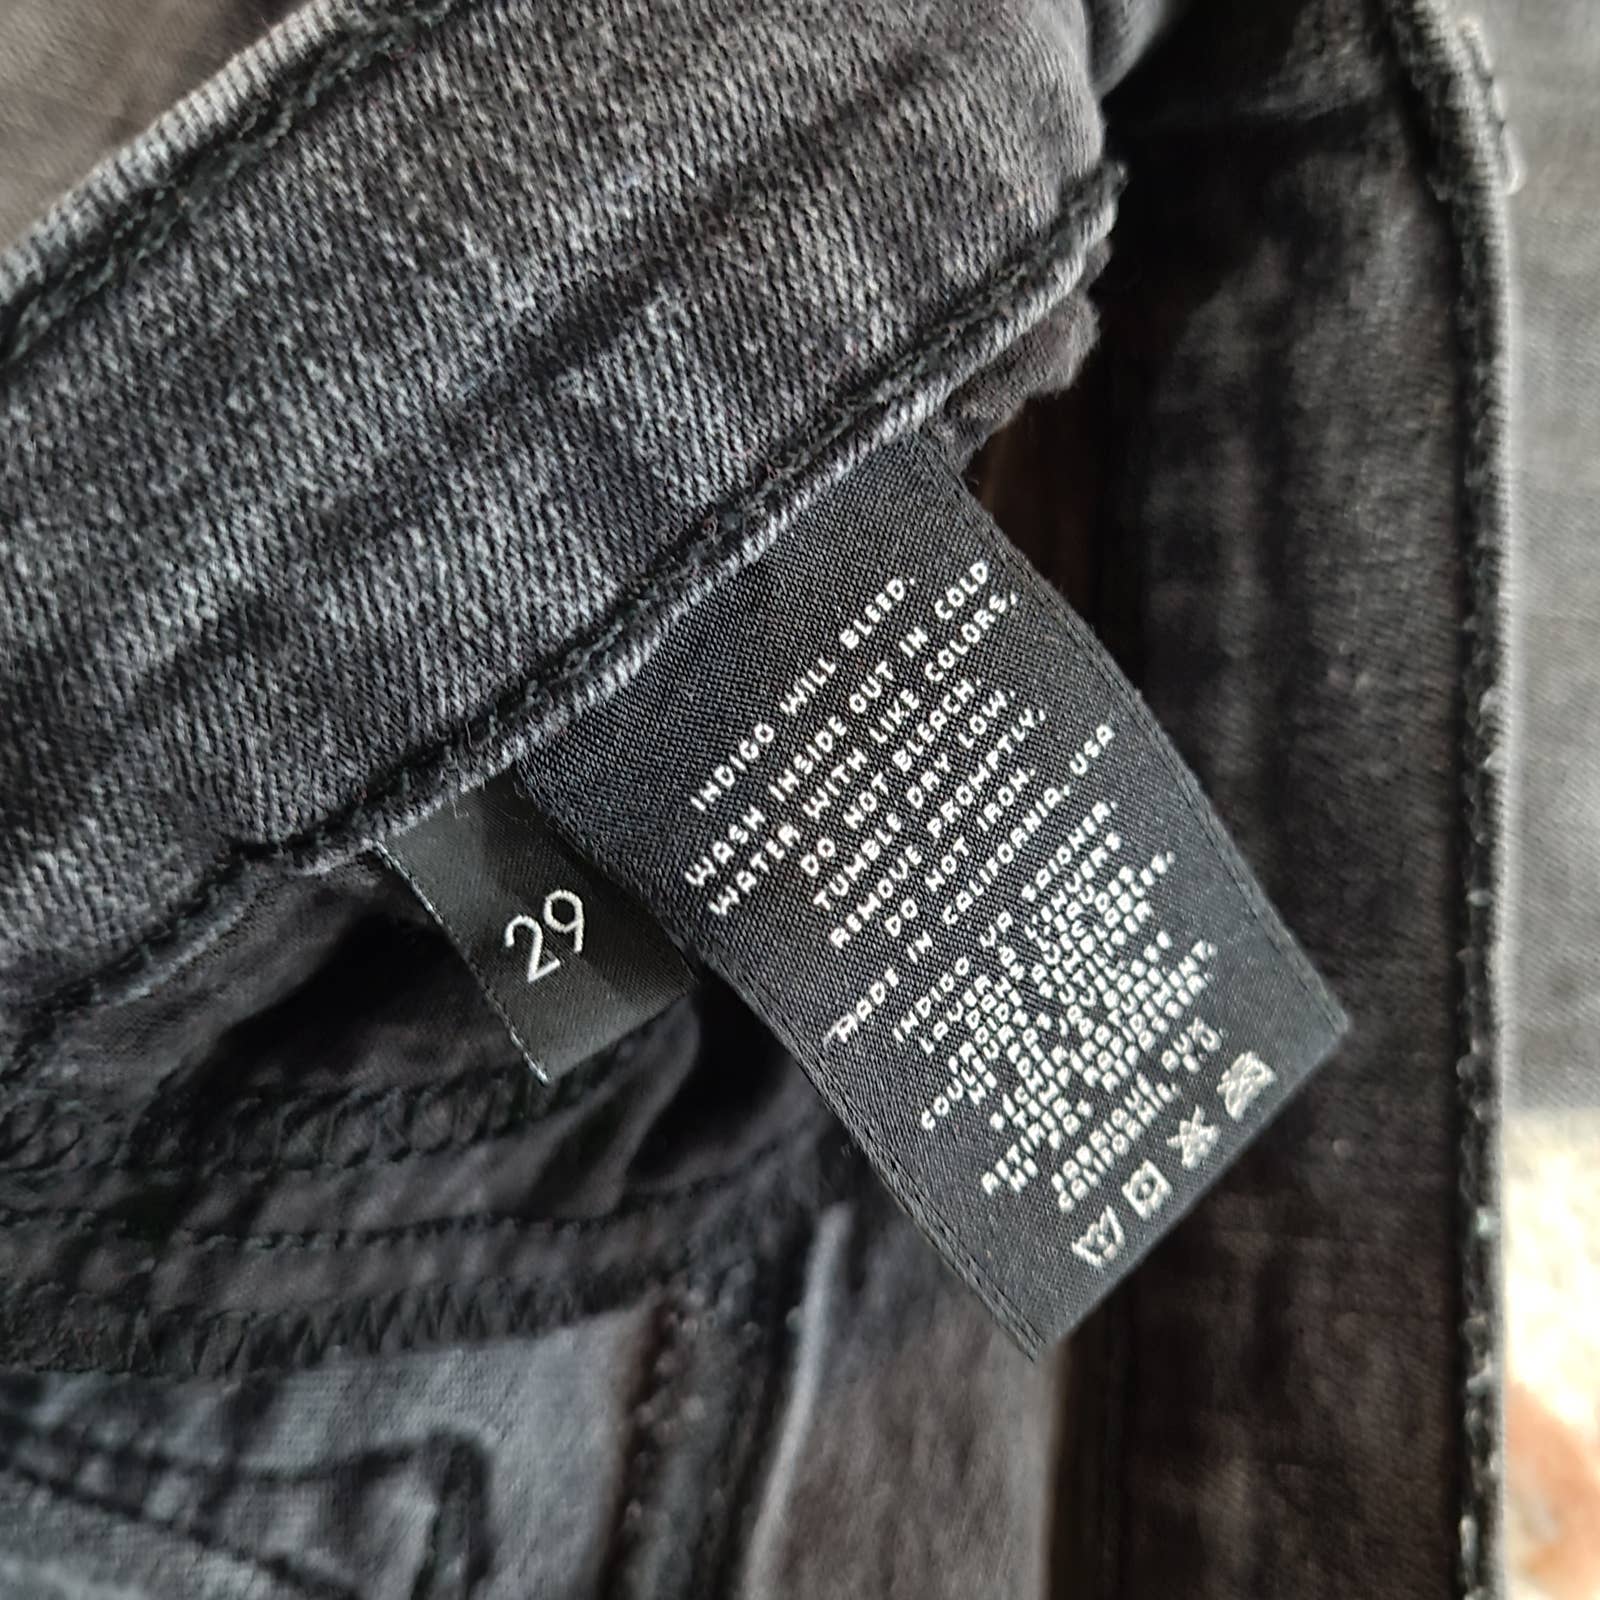 J Brand Super Skinny Prose Black Wash Jeans - Size 29Markita's ClosetJ Brand